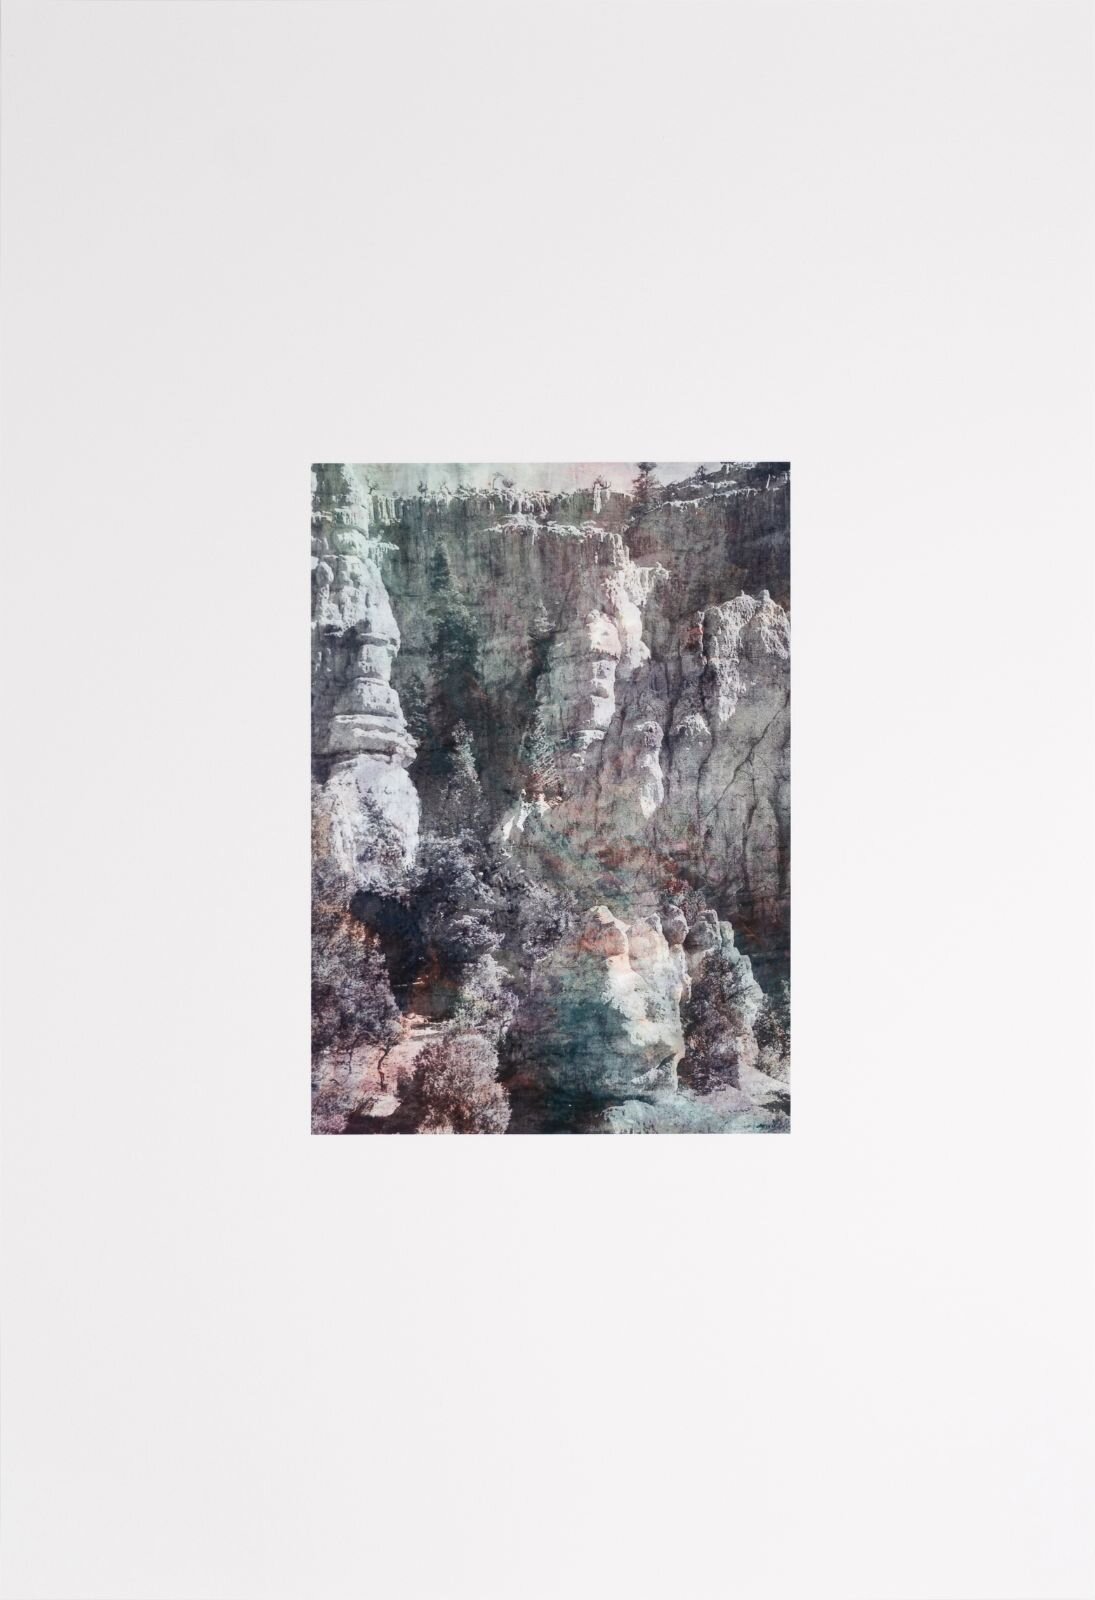  Cole Sternberg  leaving the bedrock bare,  2019 Ink on paper 19” x 13” 